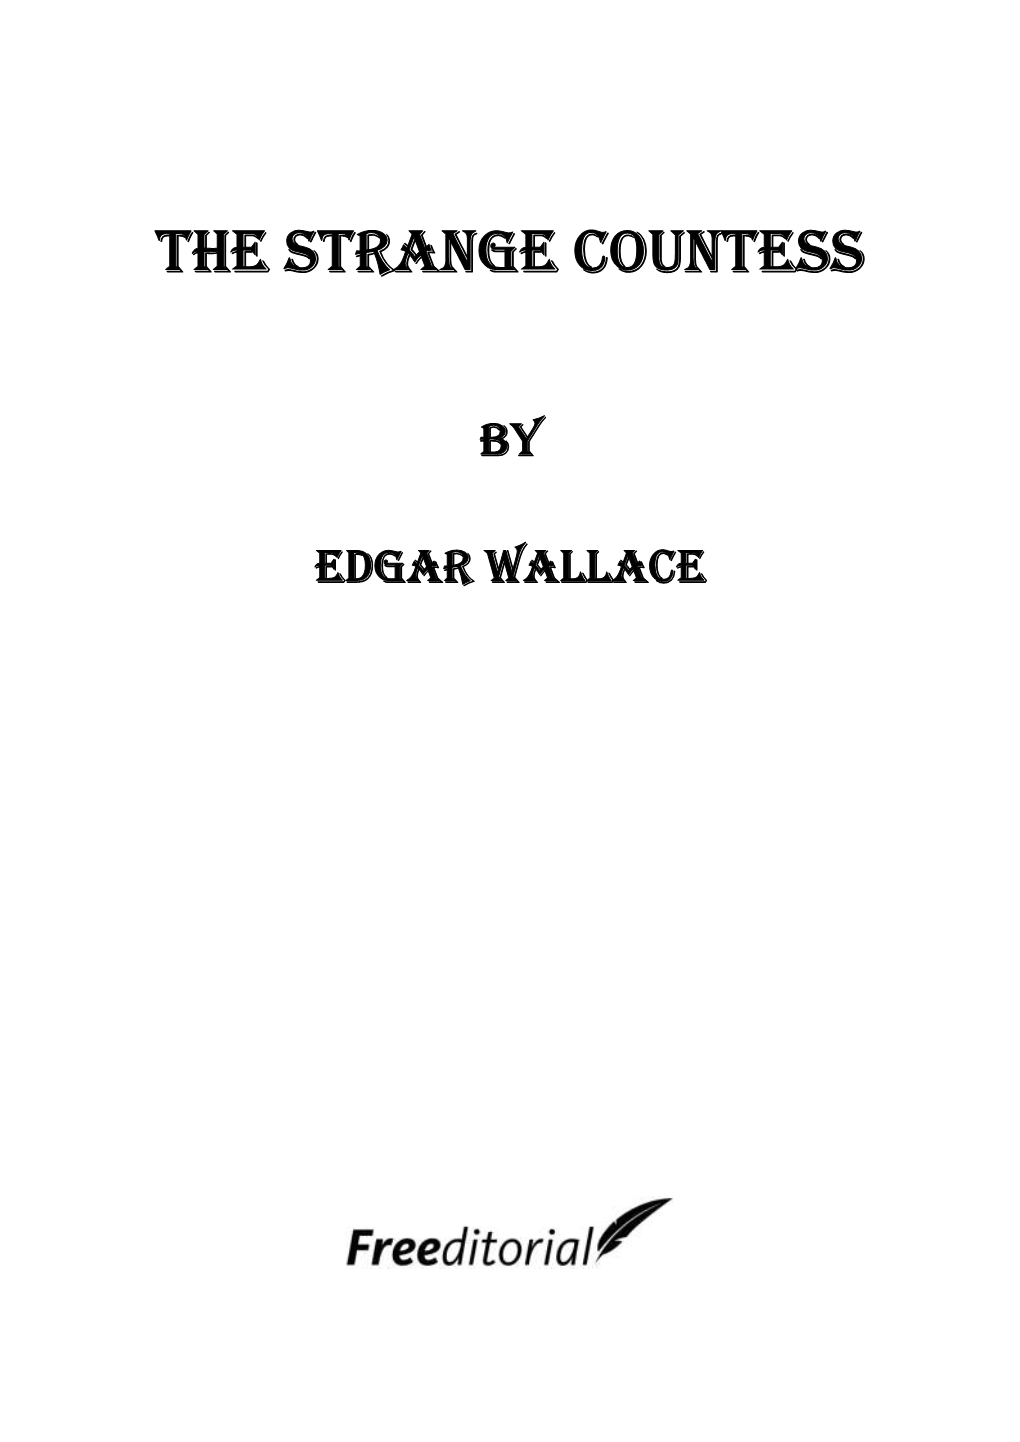 The Strange Countess